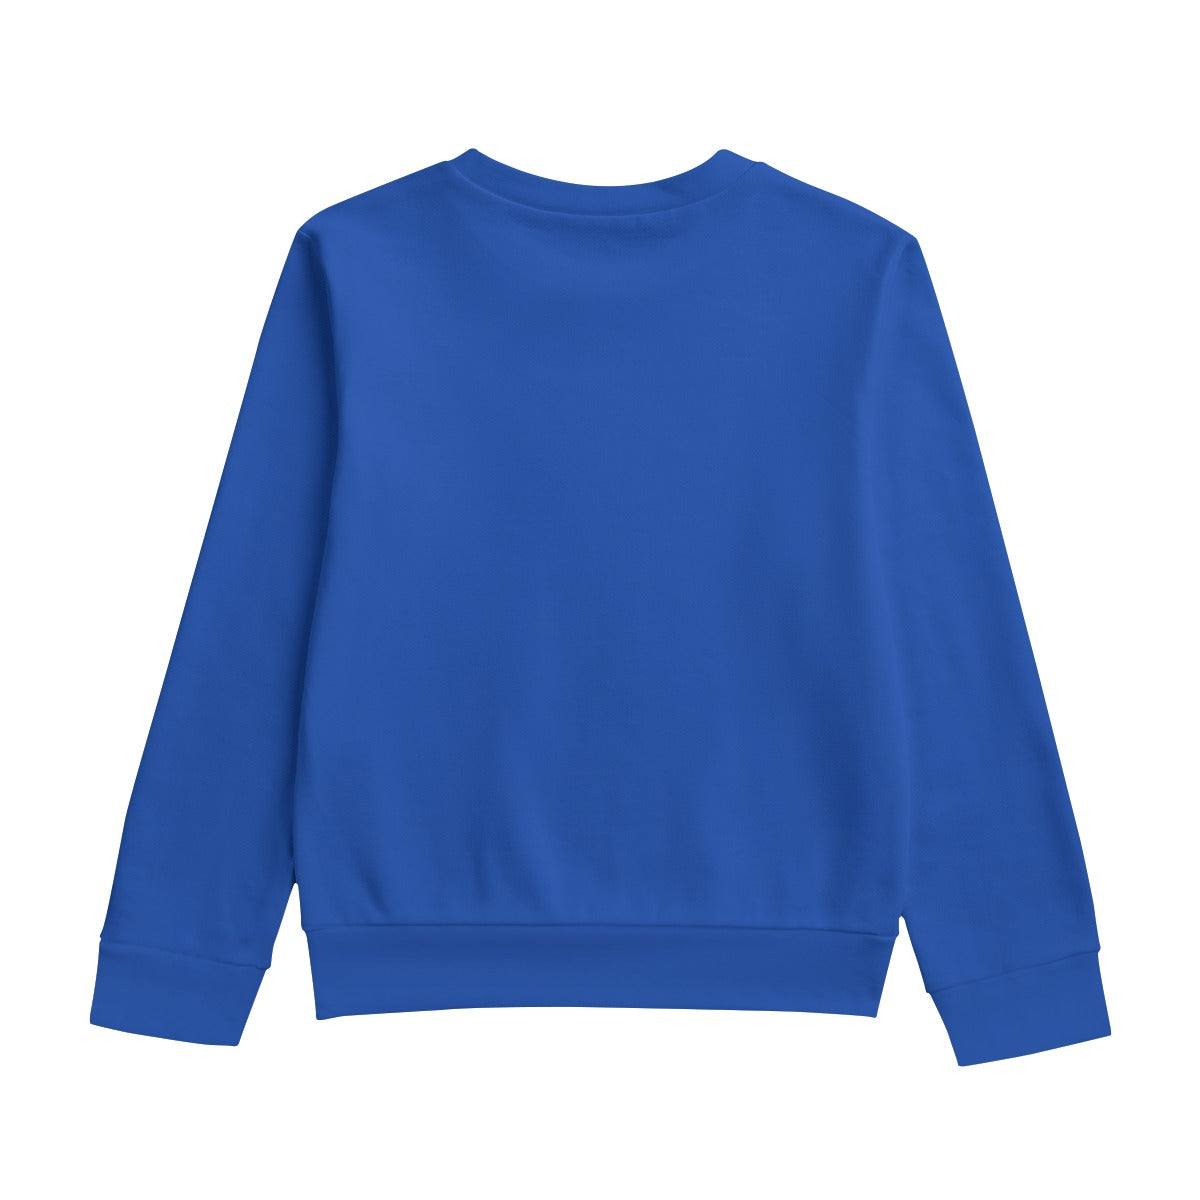 Sixty Eight 93 Logo White Blue Kid's Round Neck Sweatshirt